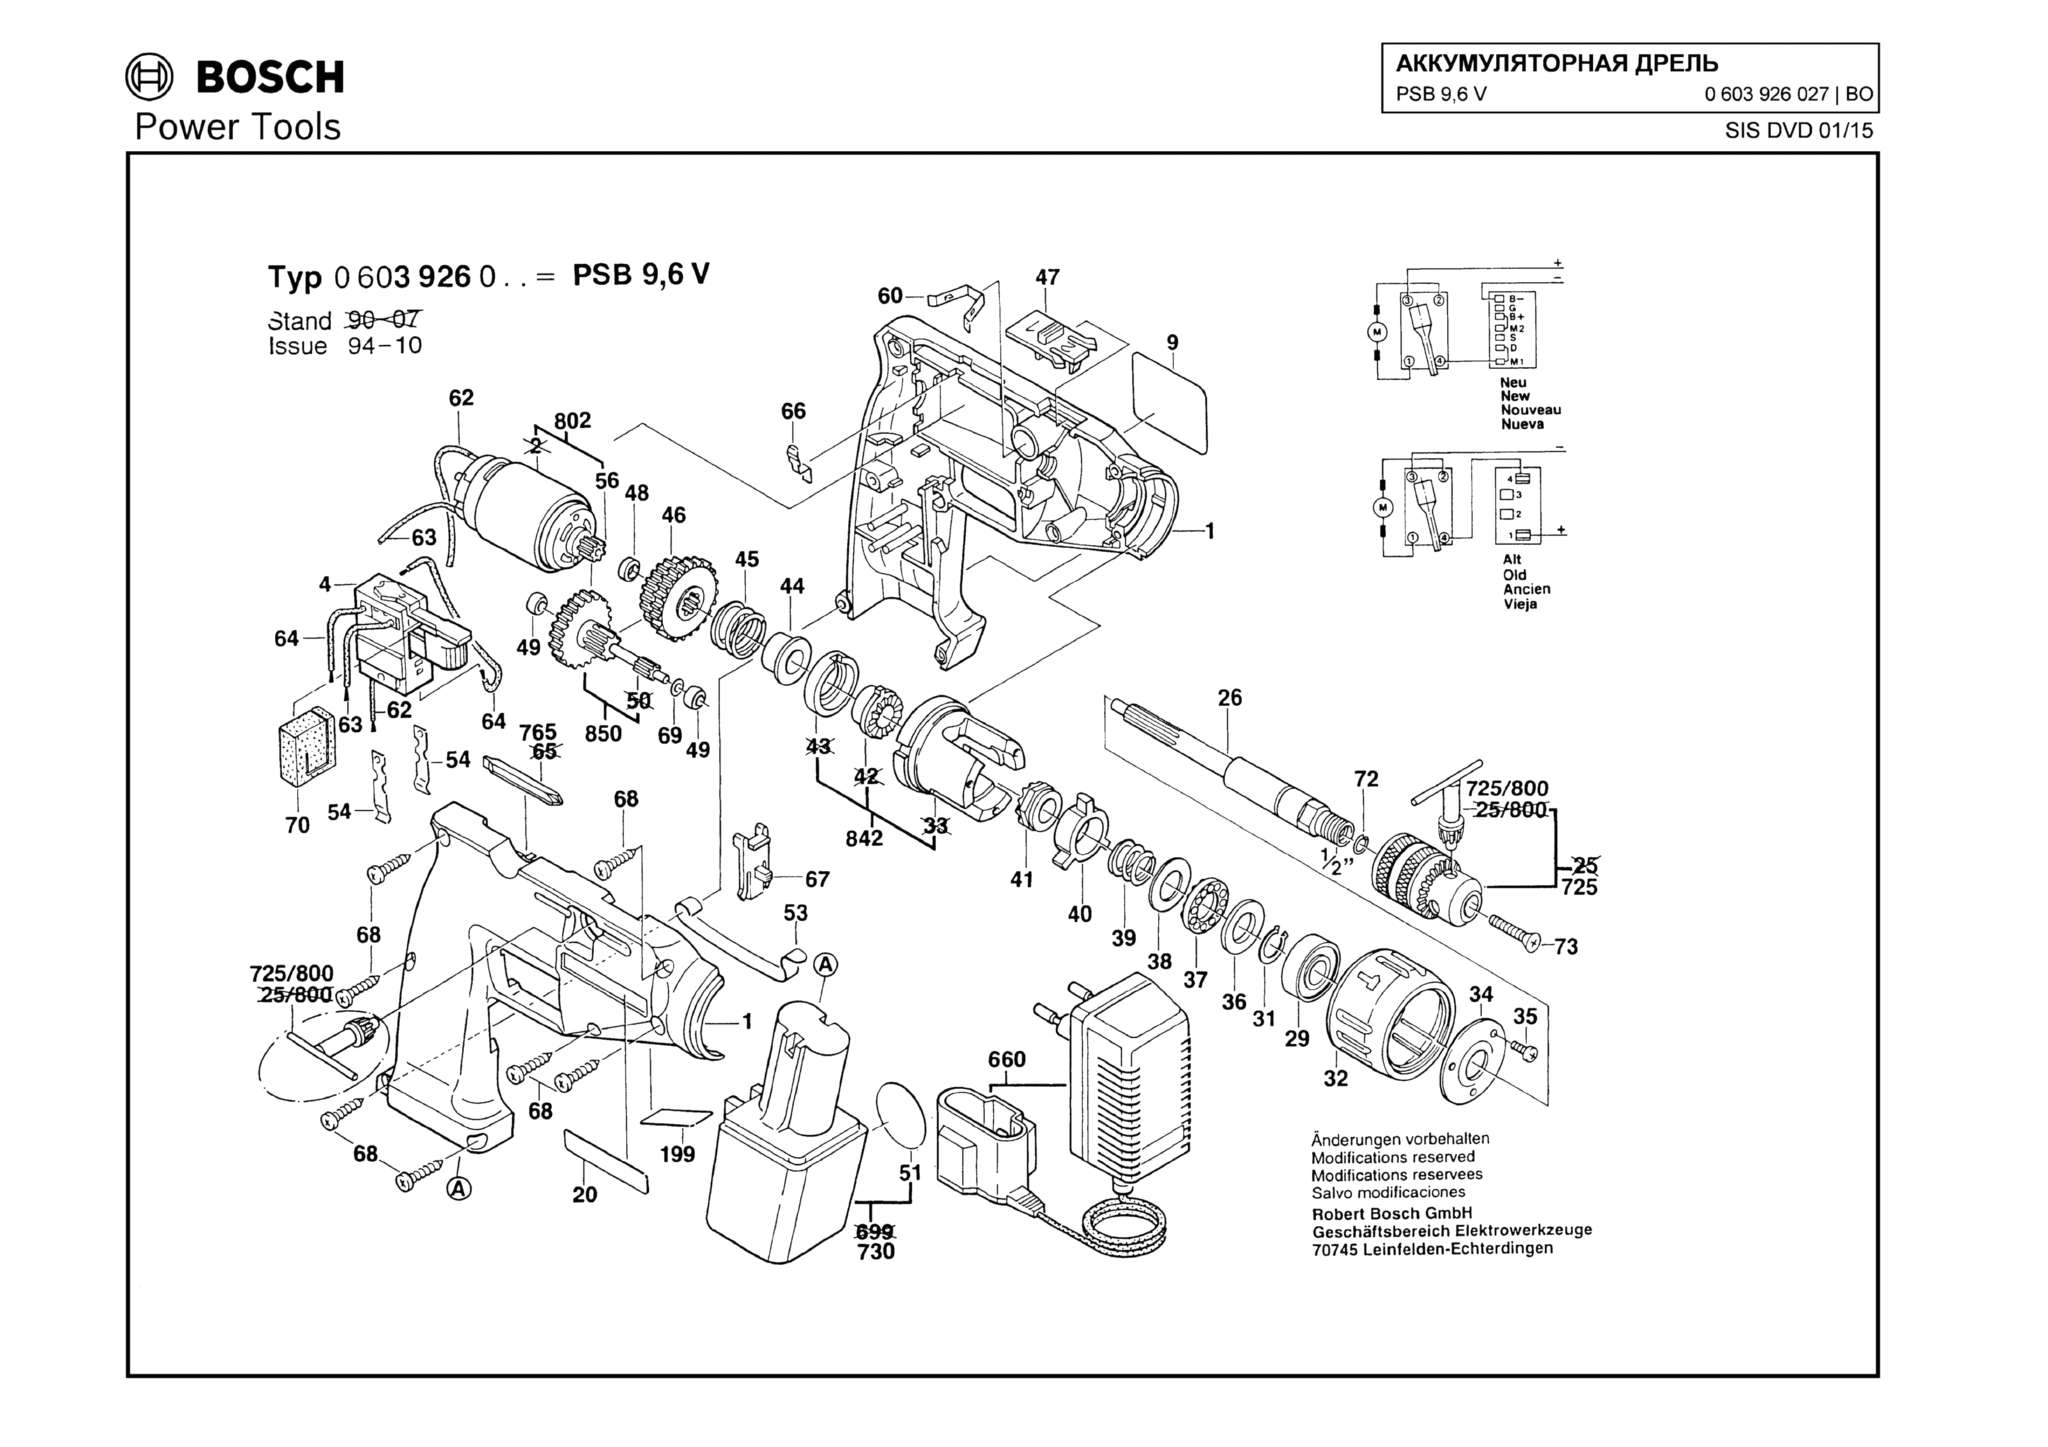 Запчасти, схема и деталировка Bosch PSB 9,6 V (ТИП 0603926027)